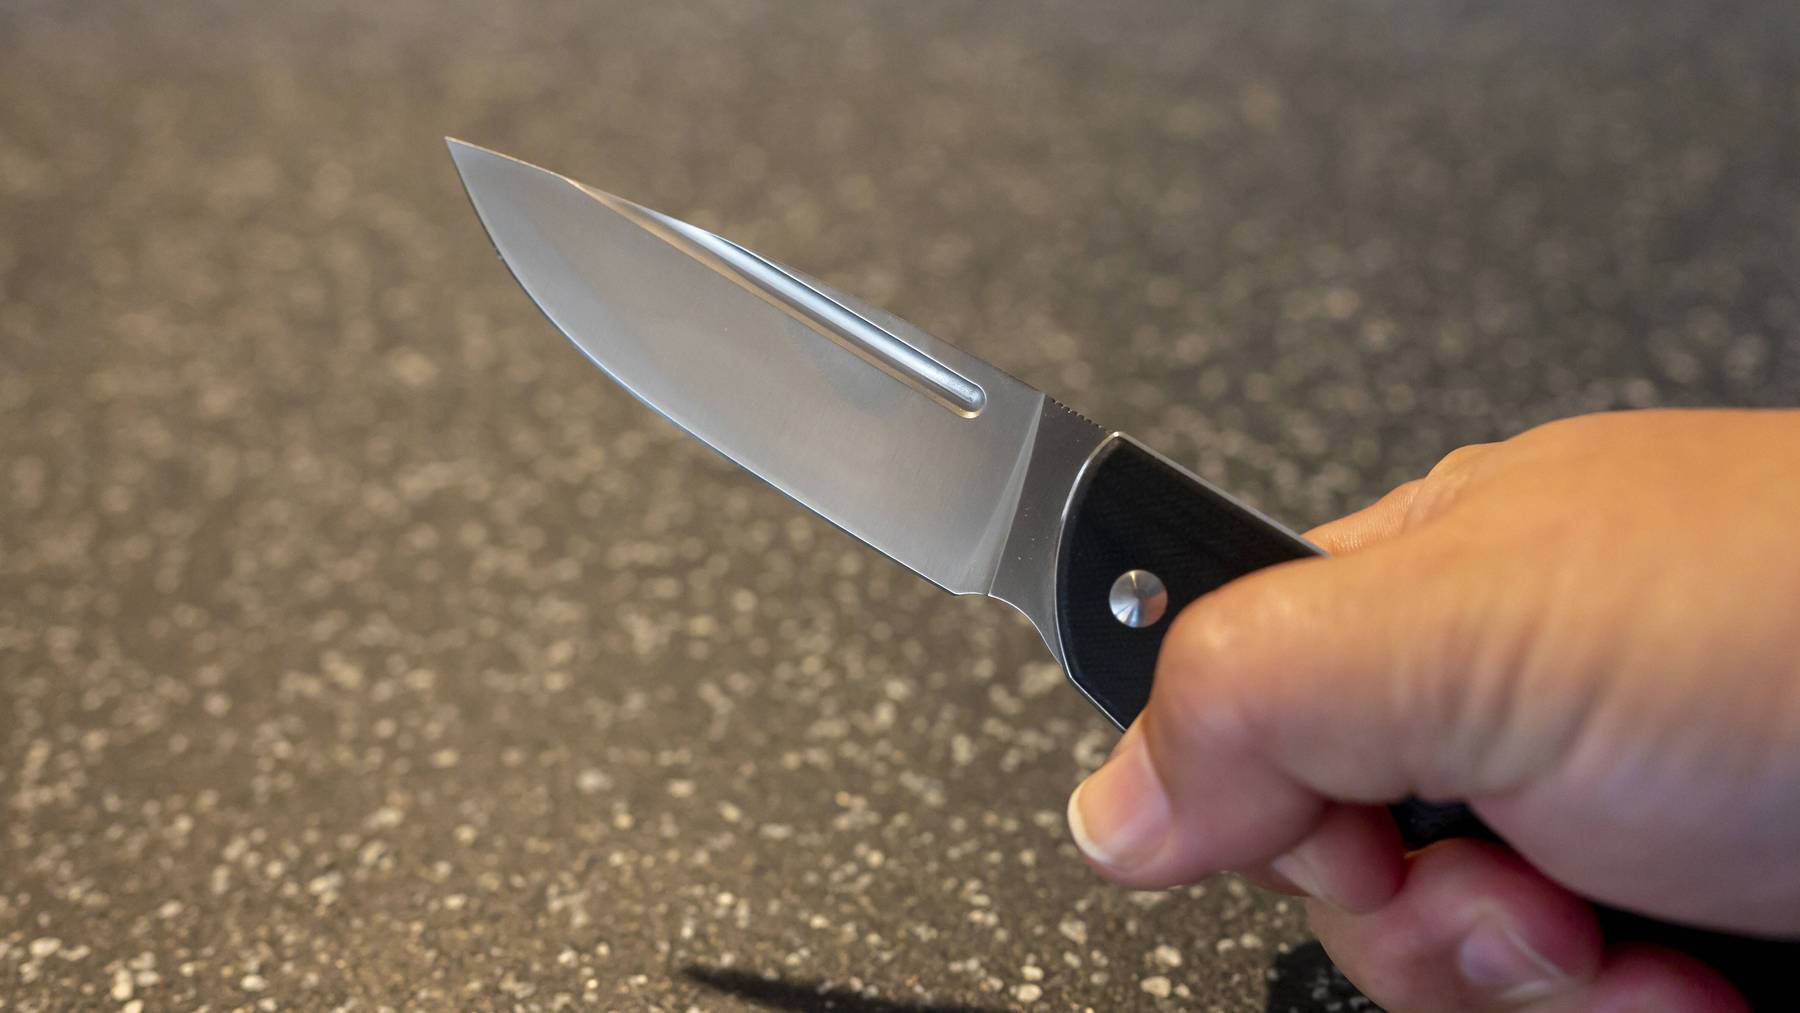 Messer, Messerangriff, Messerattacke, Messer-Angriff, Messer-Attacke (Symbolbild)